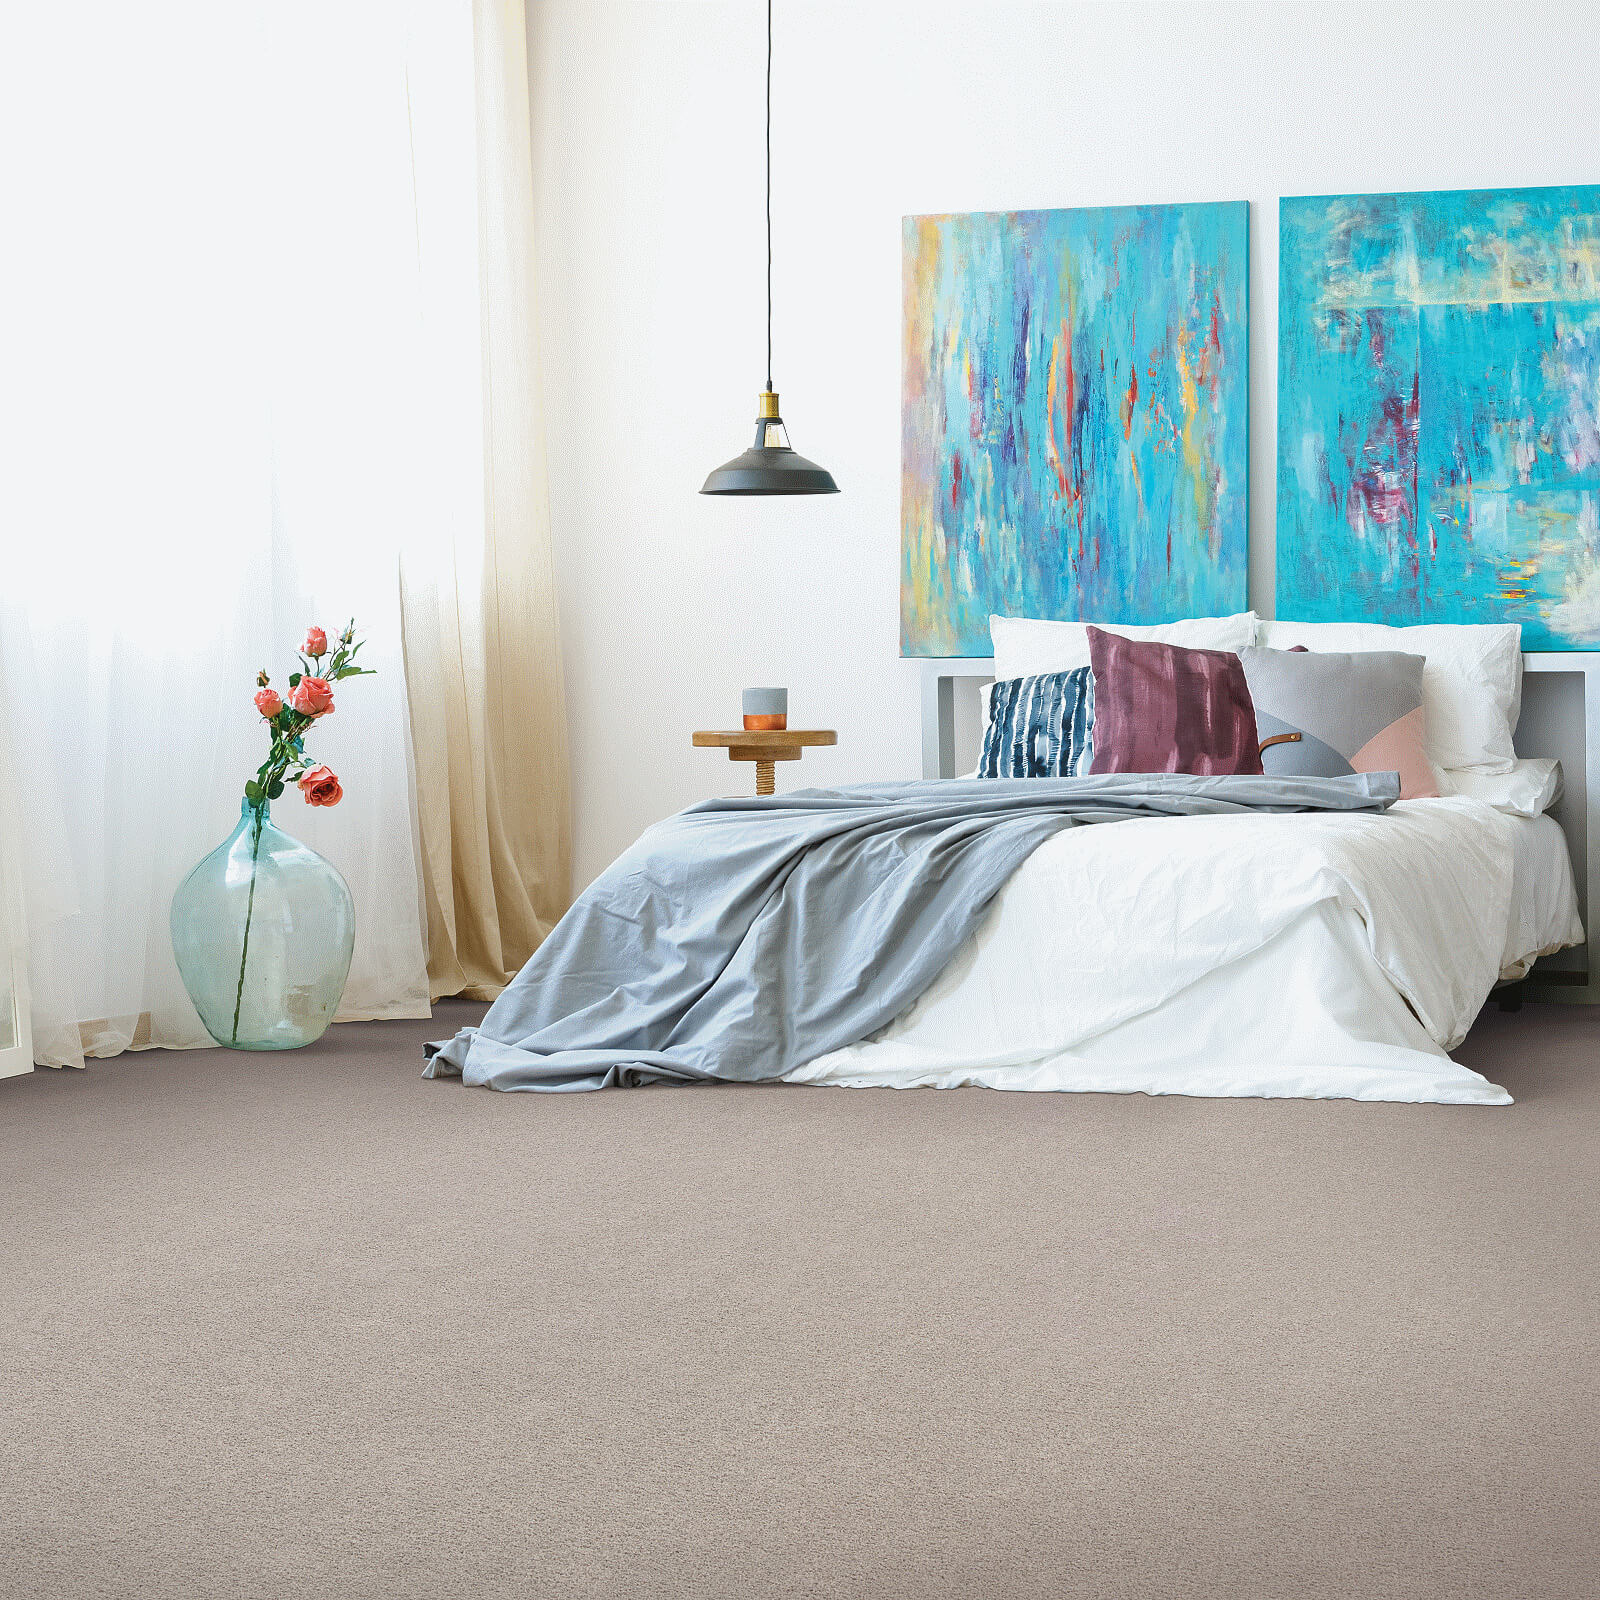 carpet in bedroom Omaha, NE | Kelly's Carpet Omaha